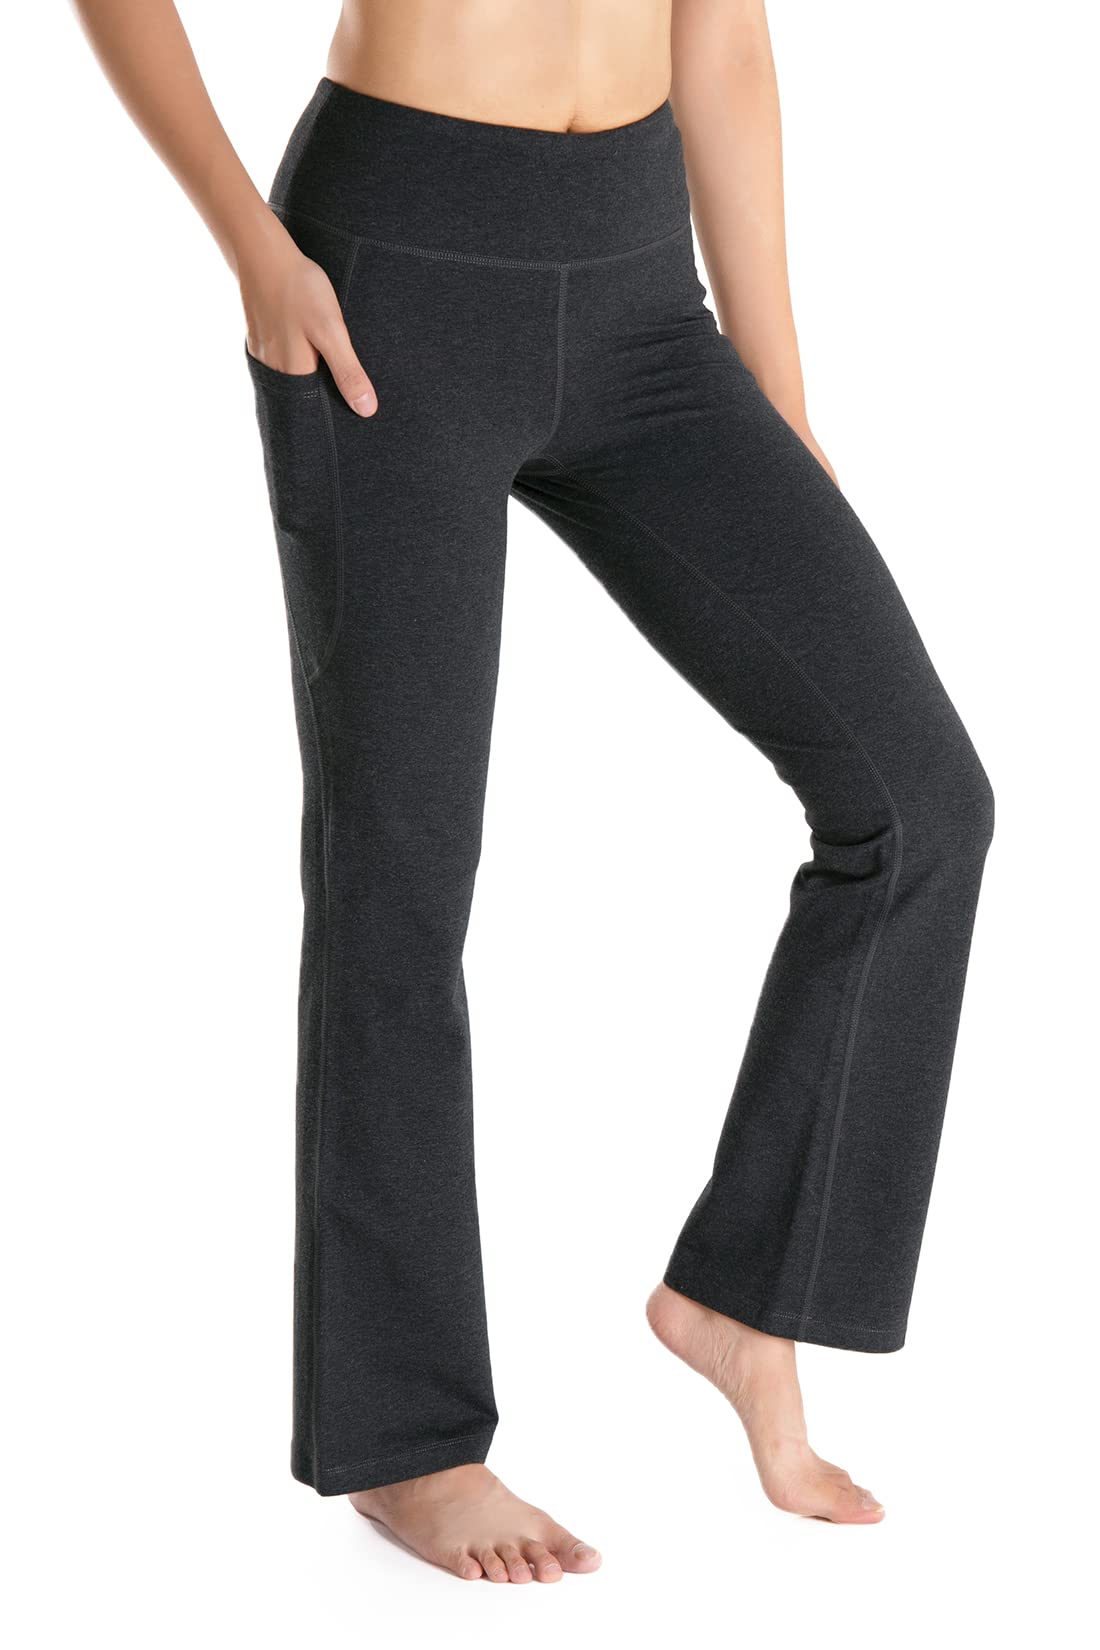 Yogipace, Side Pockets, Tall Womens Bootcut Yoga Pants Workout